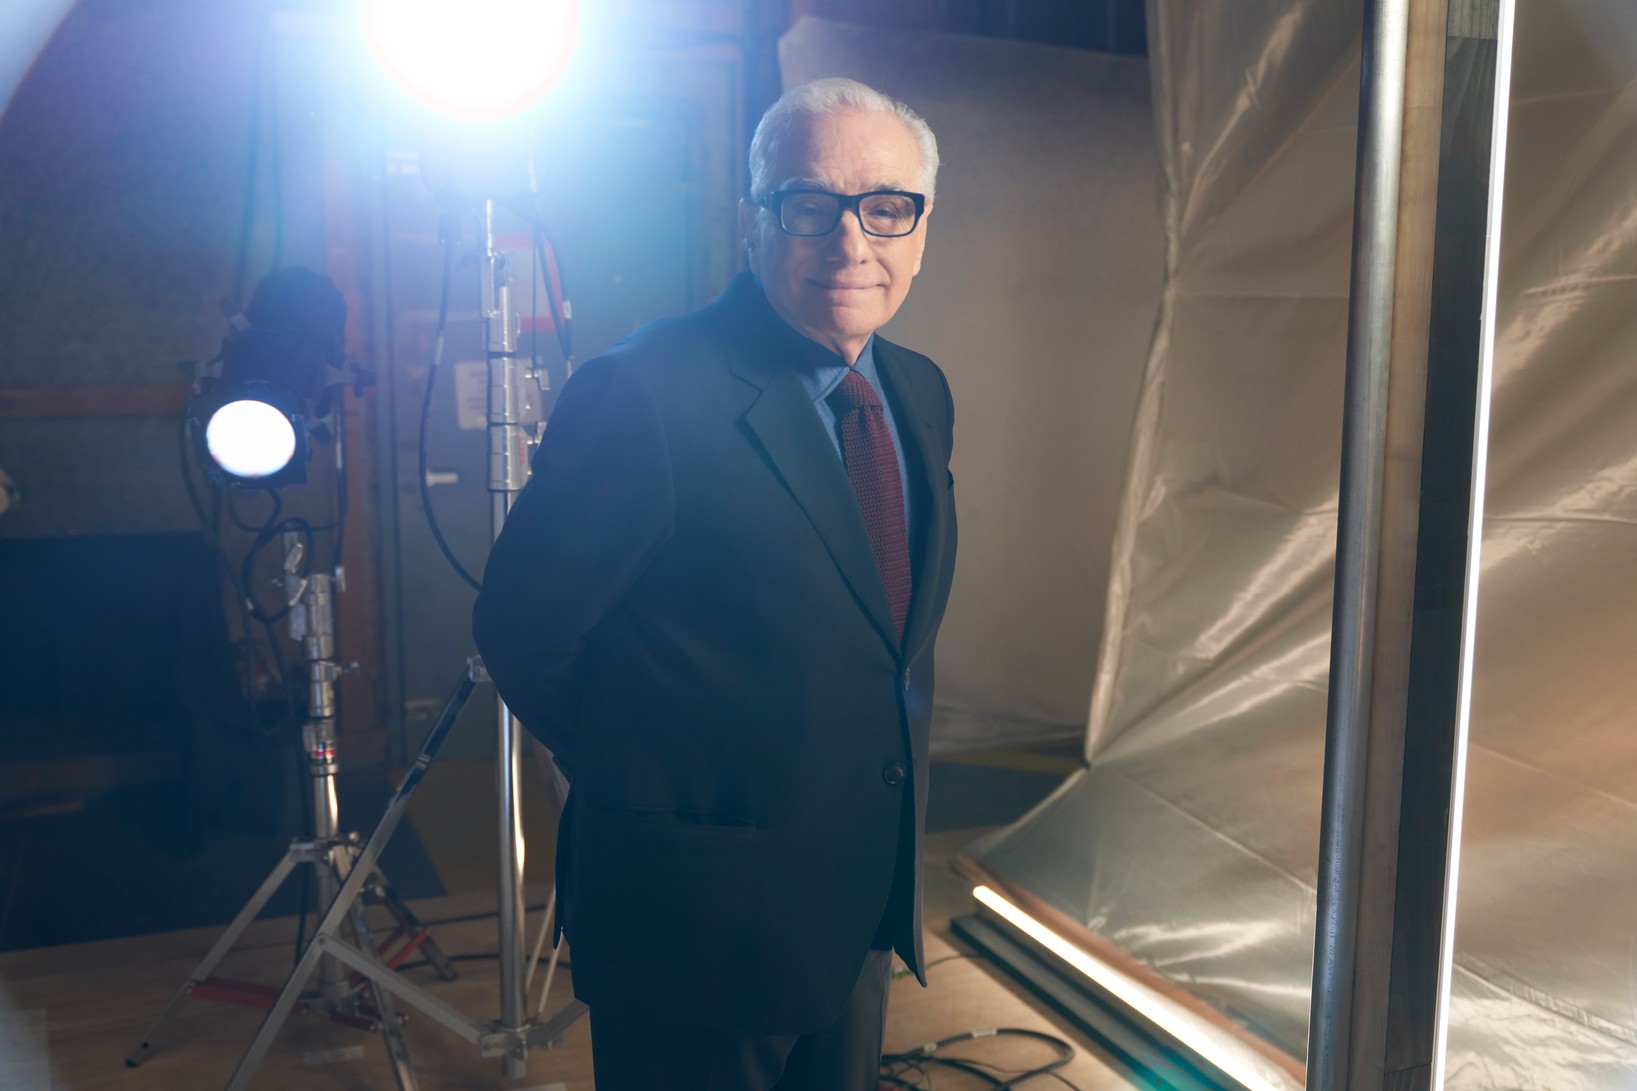 Scorsese, Cameron, Iñárritu, Bigelow: Τι κοινό έχουν οι τέσσερις θρυλικοί σκηνοθέτες;